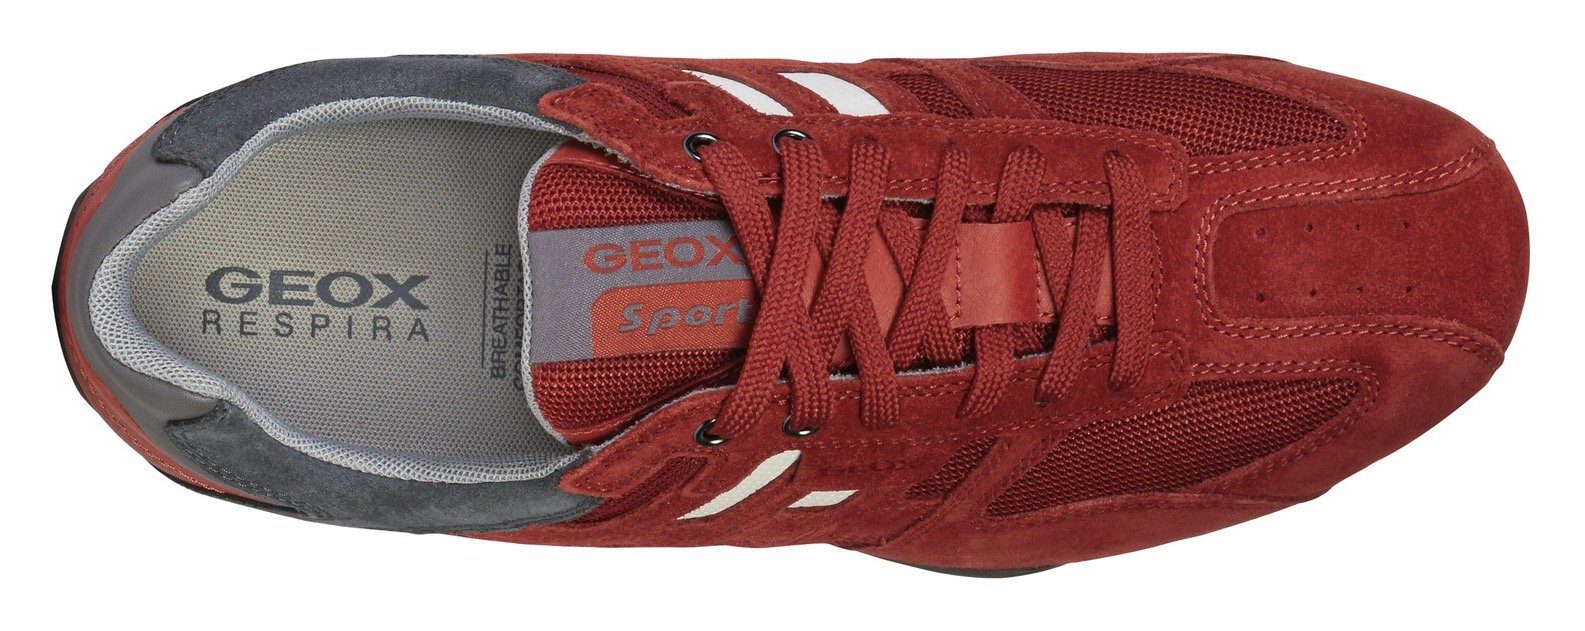 Membrane Sneaker Geox Materialmix Geox im Spezial rot-grau Snake mit